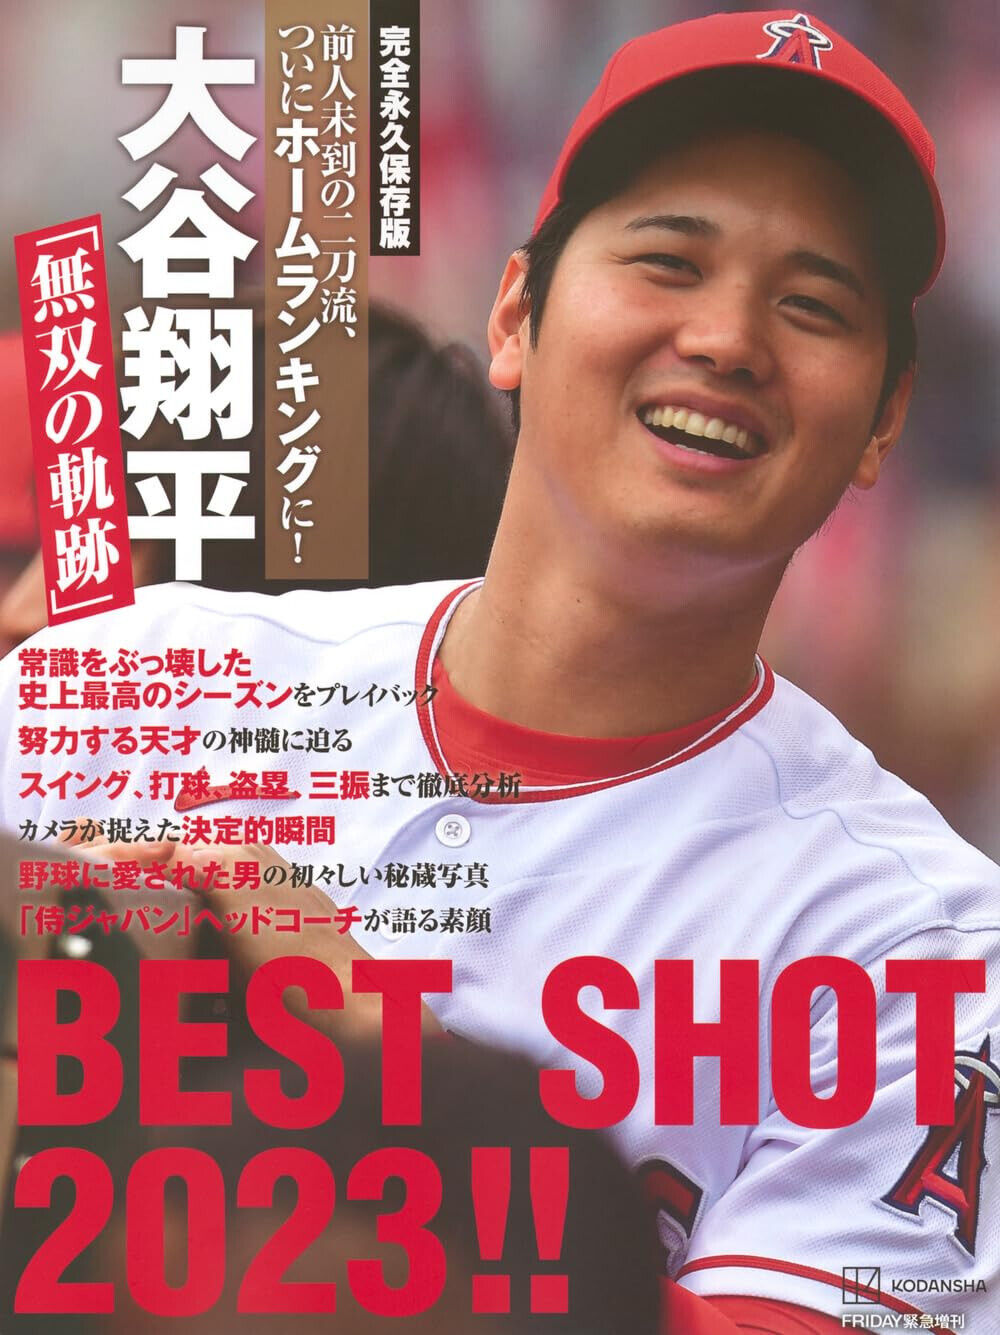 Shohei Ohtani Best Shot 2023 Japanese book